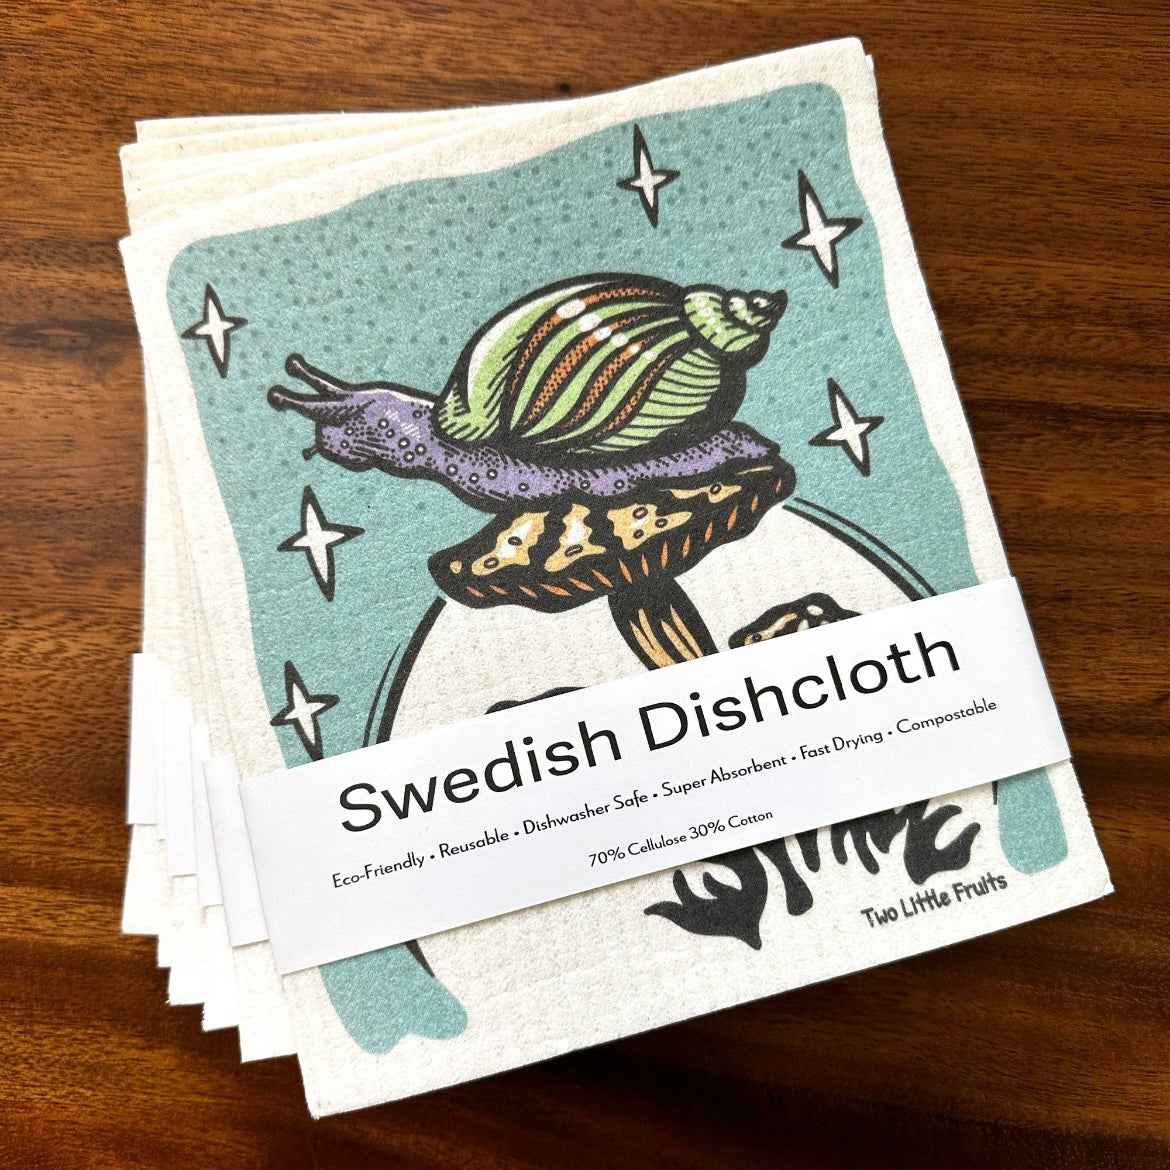 Snail and Mushroom Swedish Dishcloth